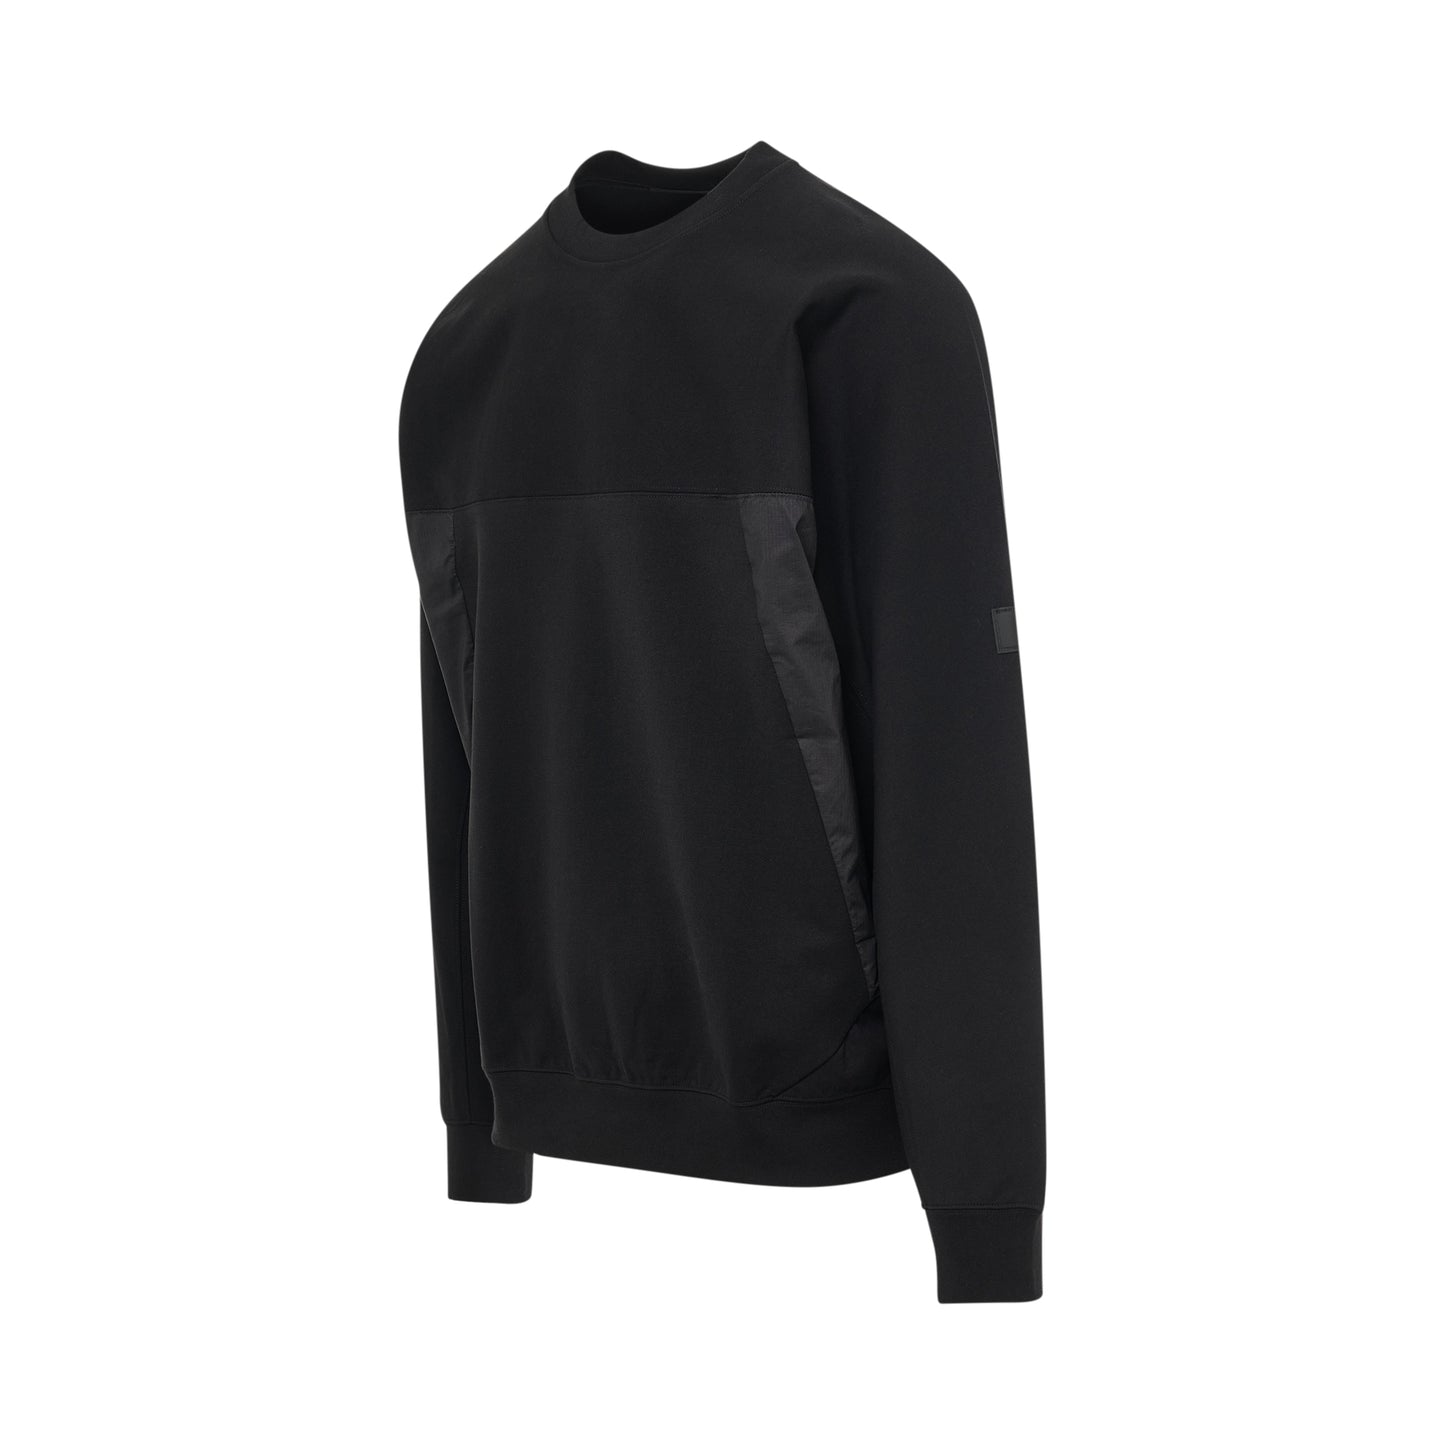 Stretch Terry Crew Sweater in Black